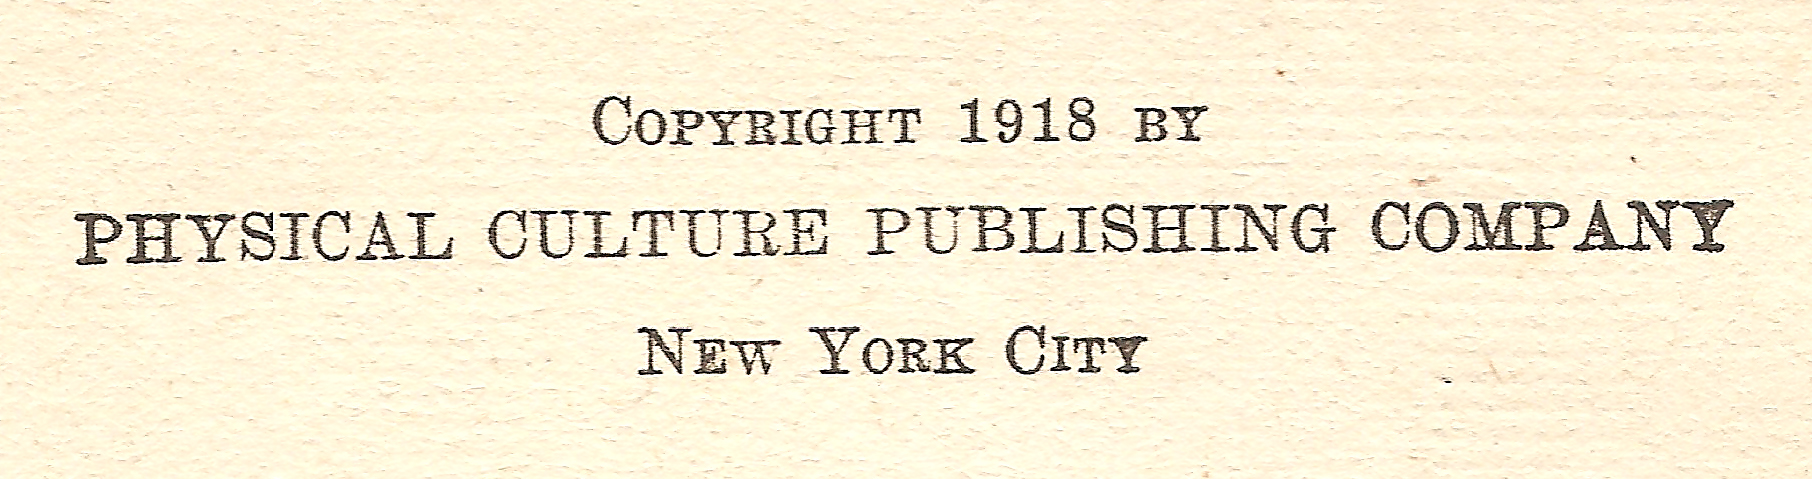 Copyright 1918